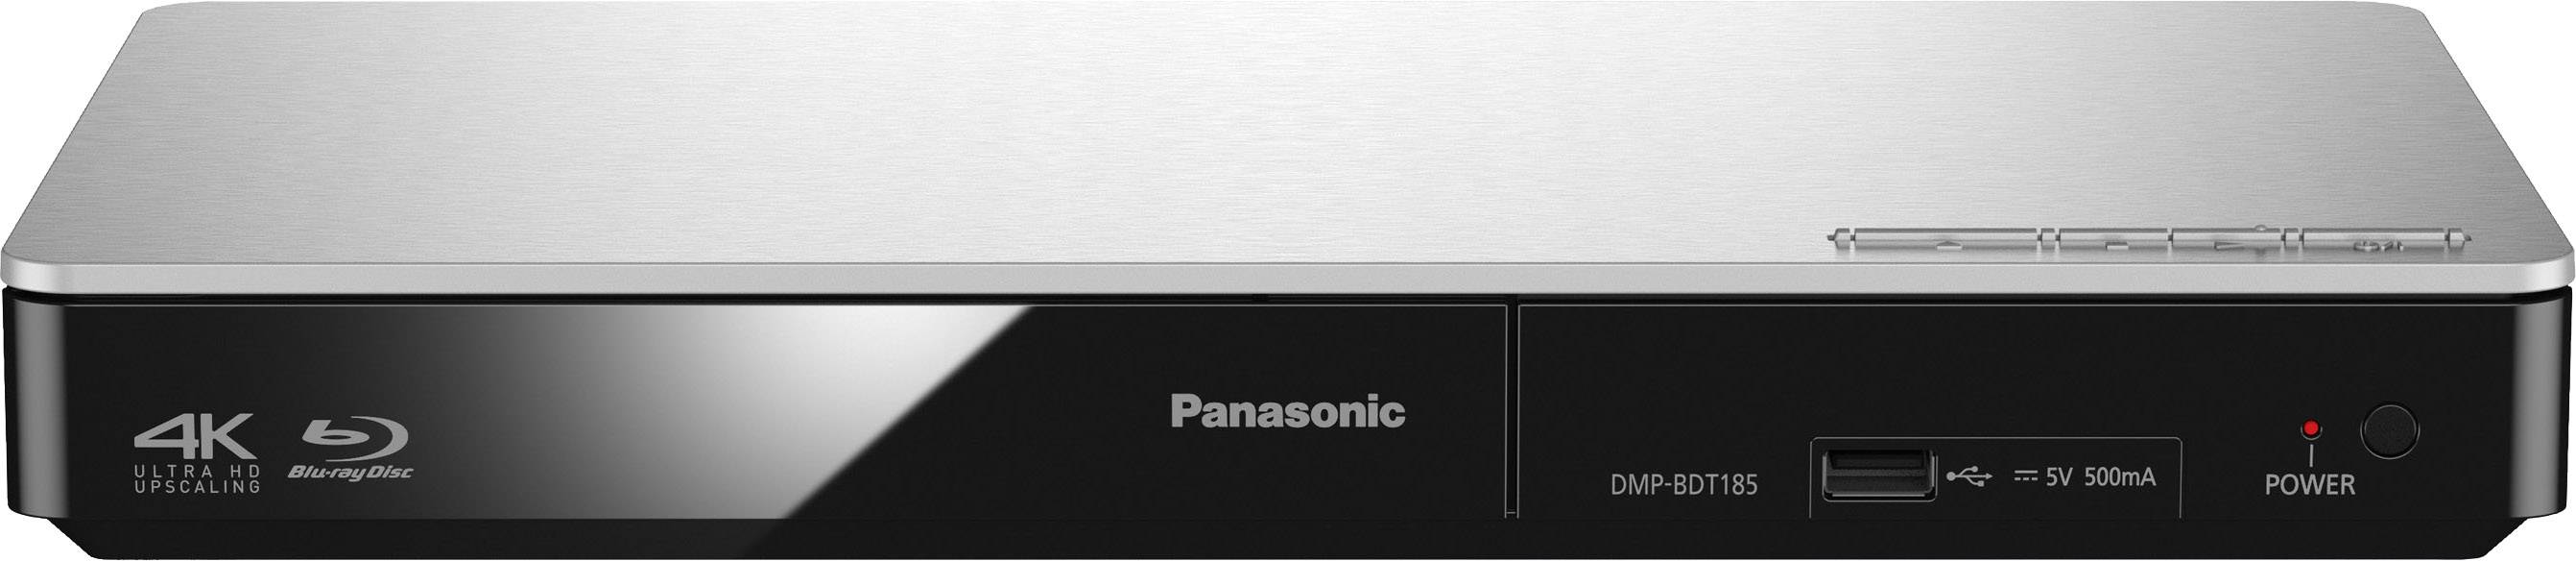 Förderung Buy Panasonic DMP-BDT185 4K Electronic | player upscaling Blu-ray 3D Conrad Silver